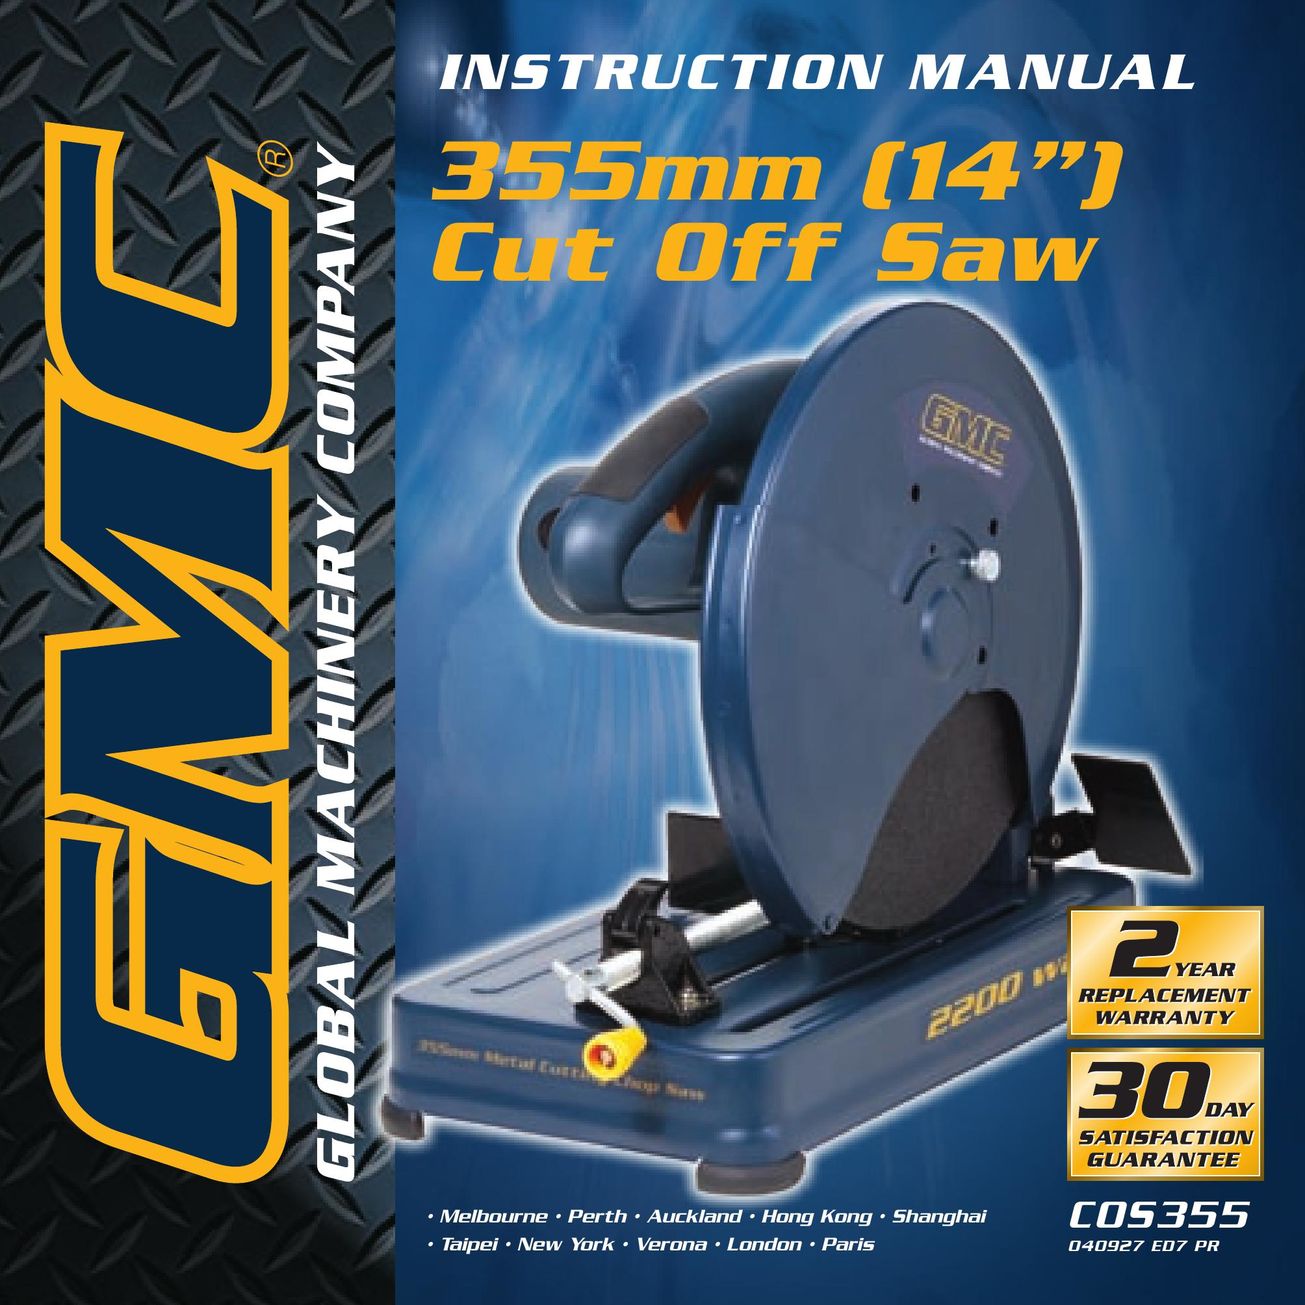 Global Machinery Company COS355 Saw User Manual